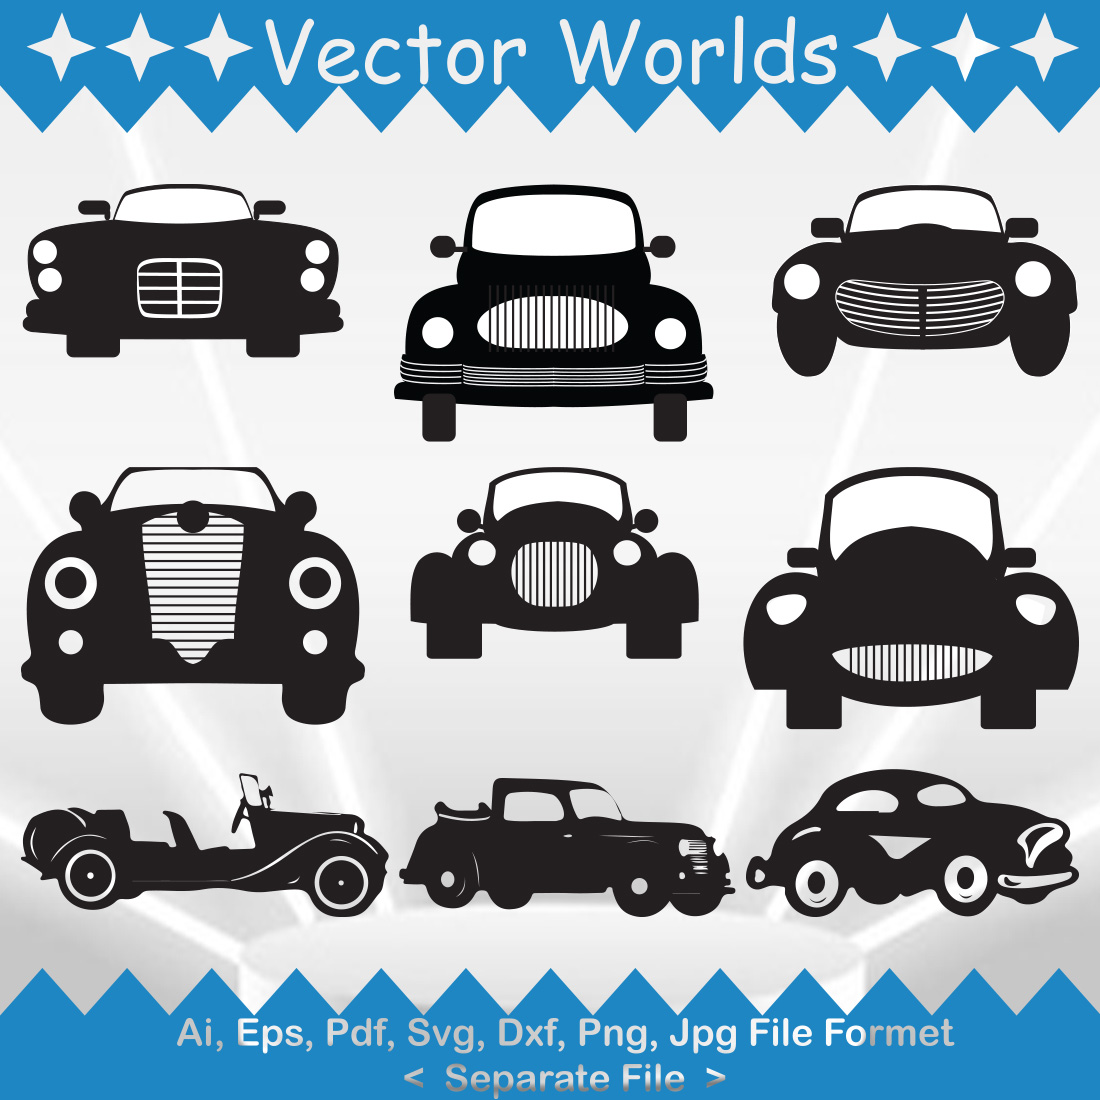 Old Car SVG Vector Design cover image.